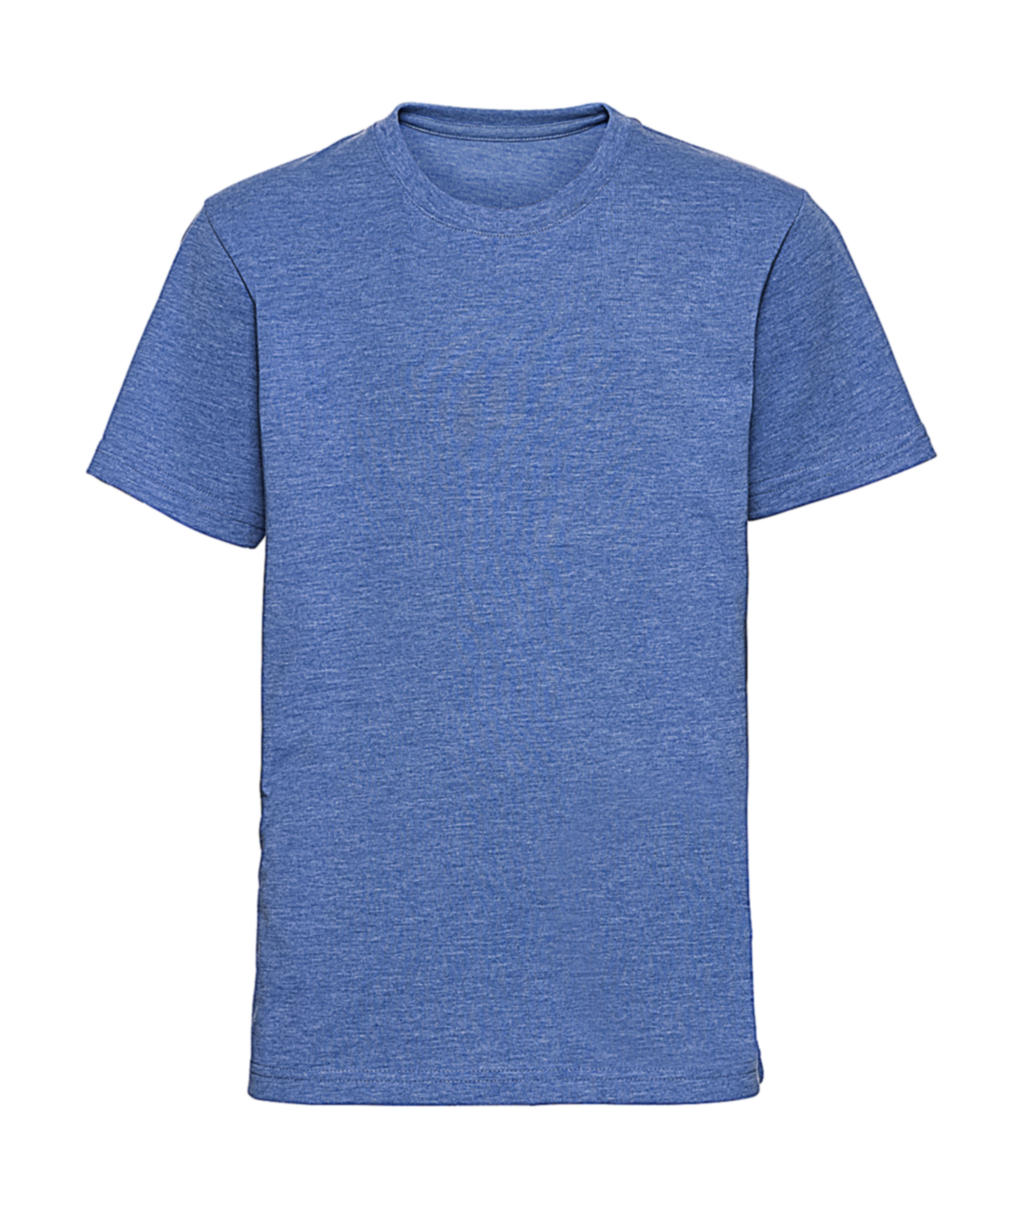 Chlapčenské tričko HD - blue marl